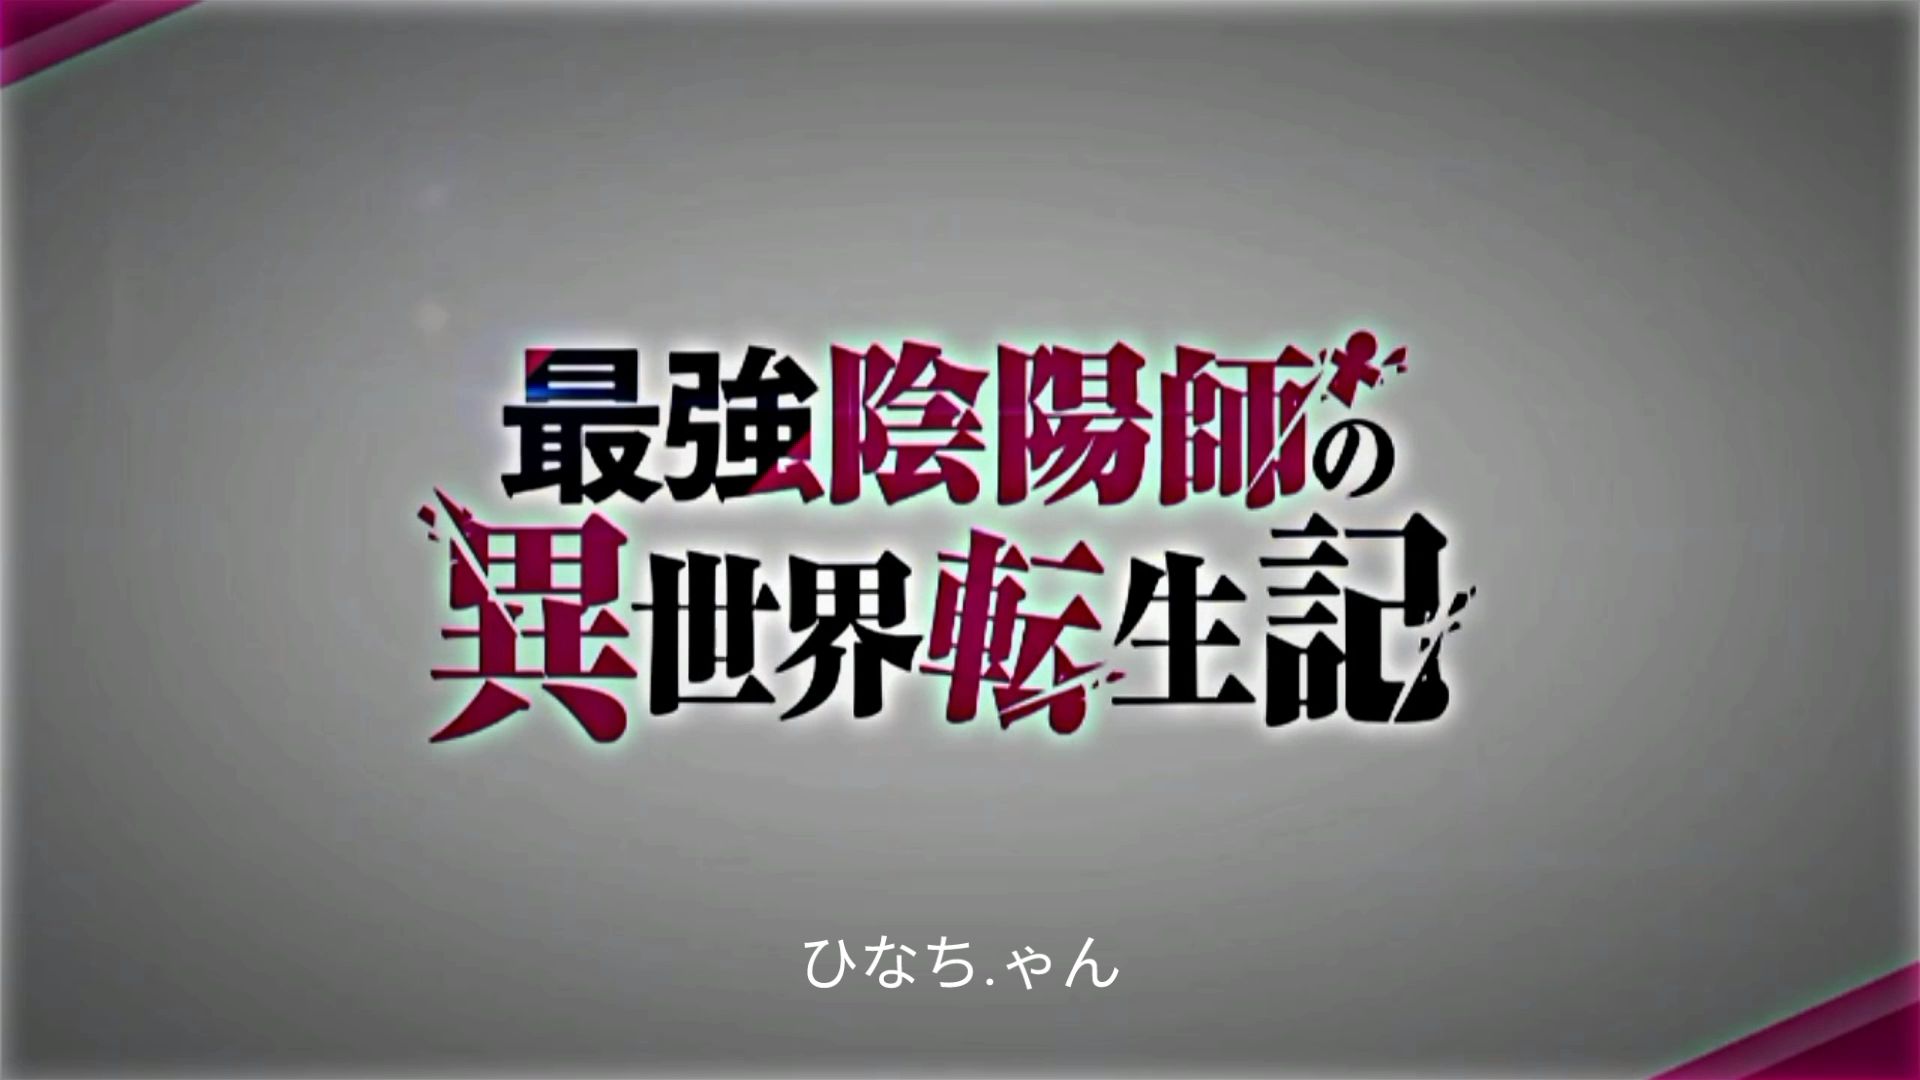 Anime Stand Saikyou Onmyouji no Isekai Tenseiki Seika Lamprogue Efa  Acrílico Figura Display Desktop Decoração 15cm